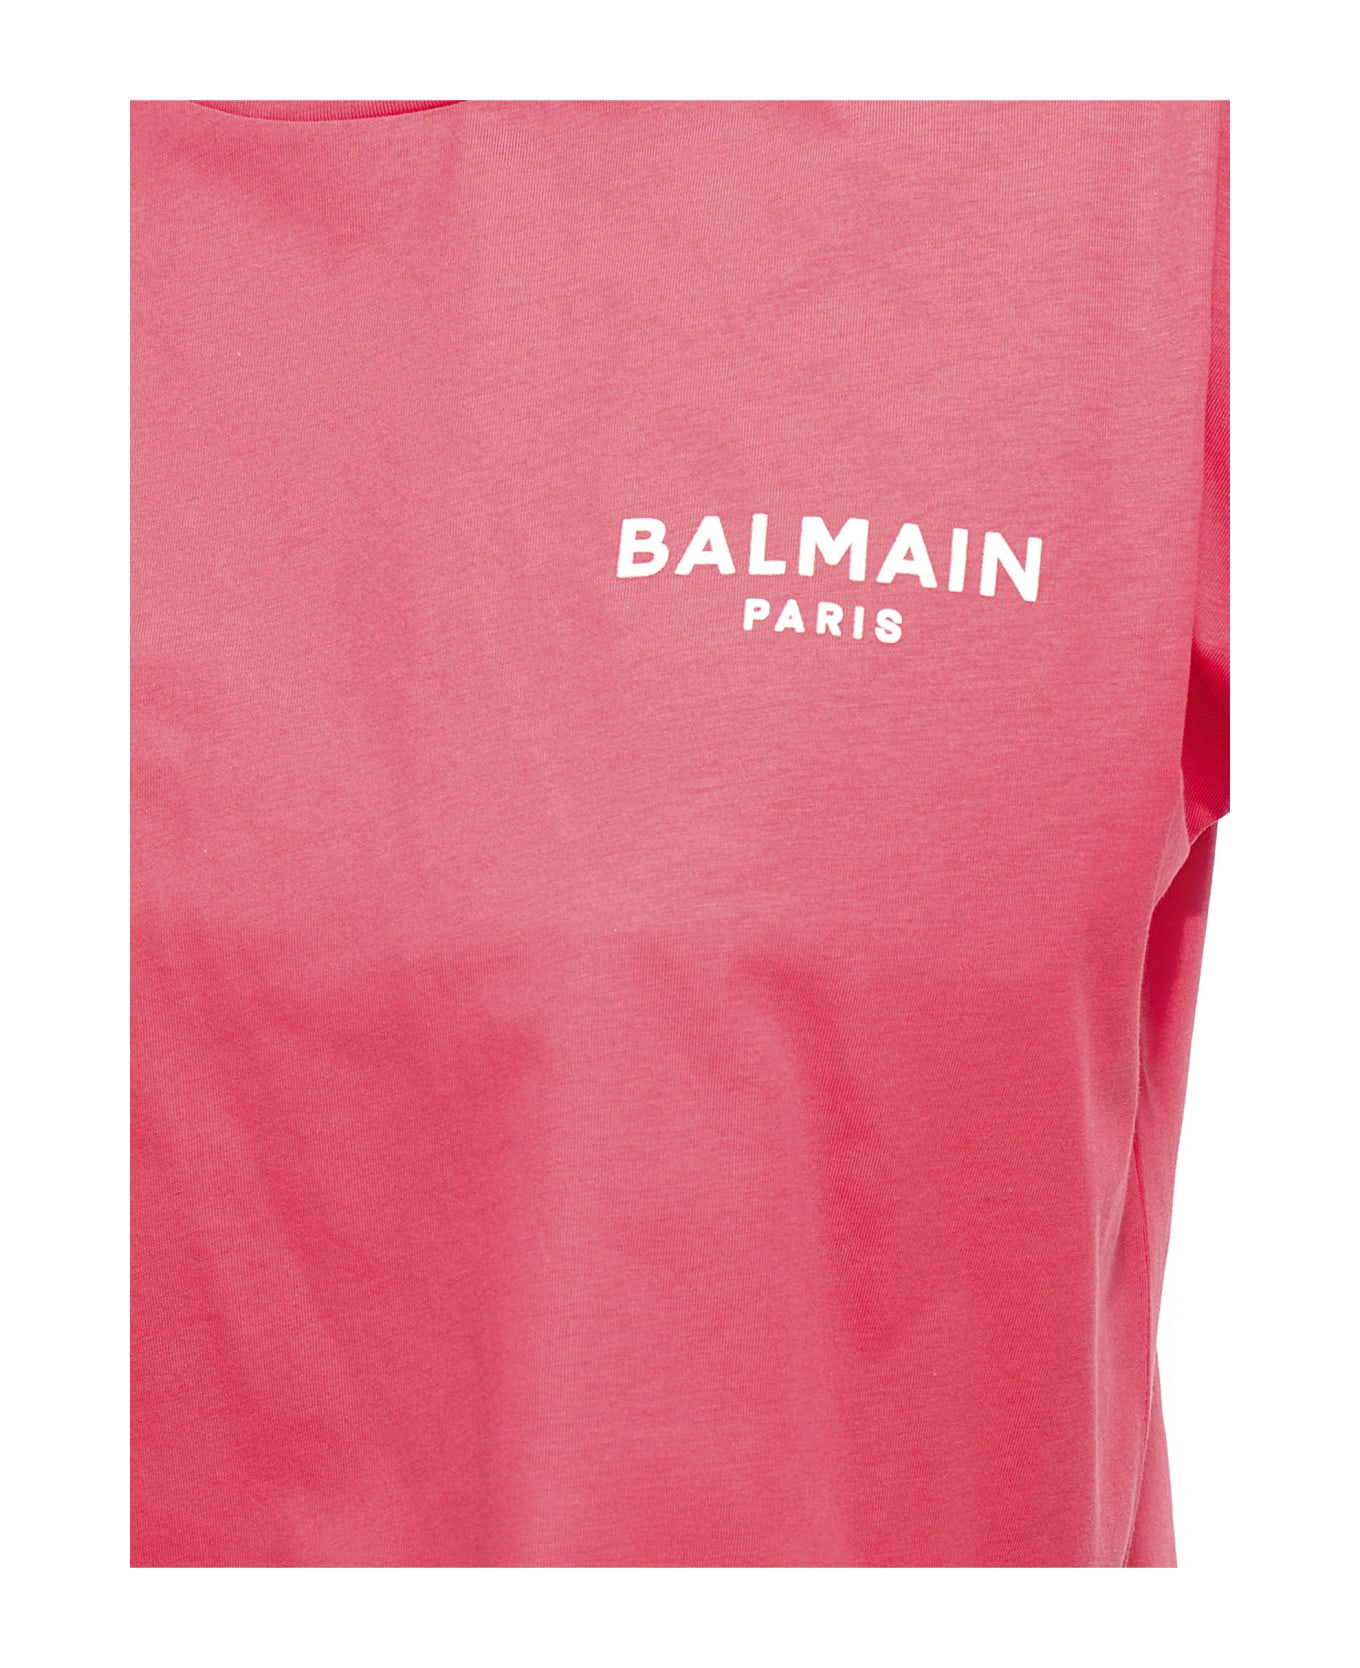 Balmain Logo Crop T-shirt - Fuchsia